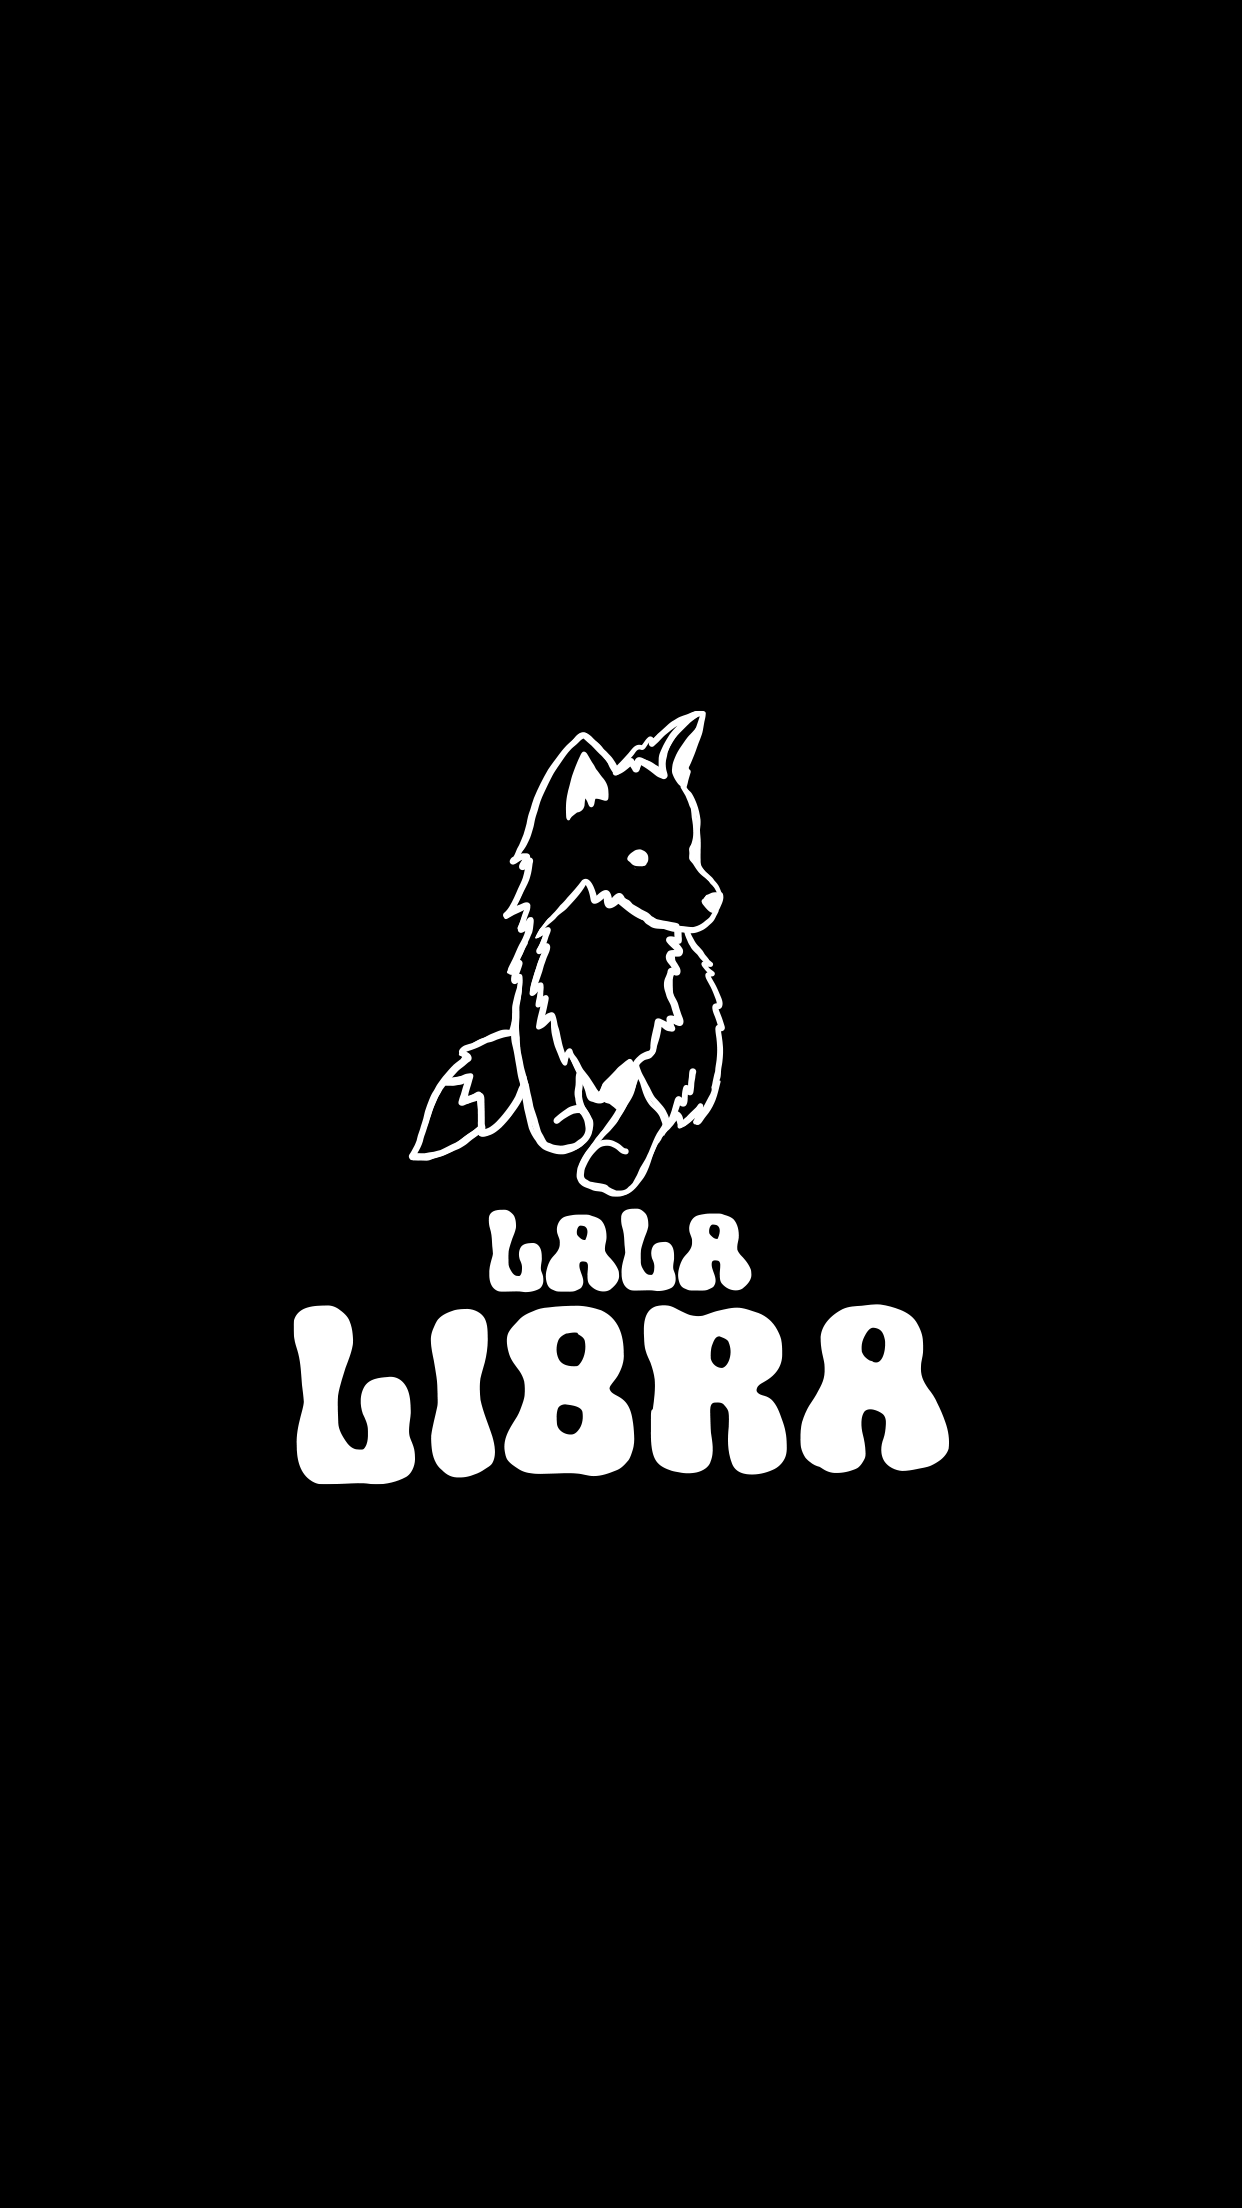 Astro LALA - Libra